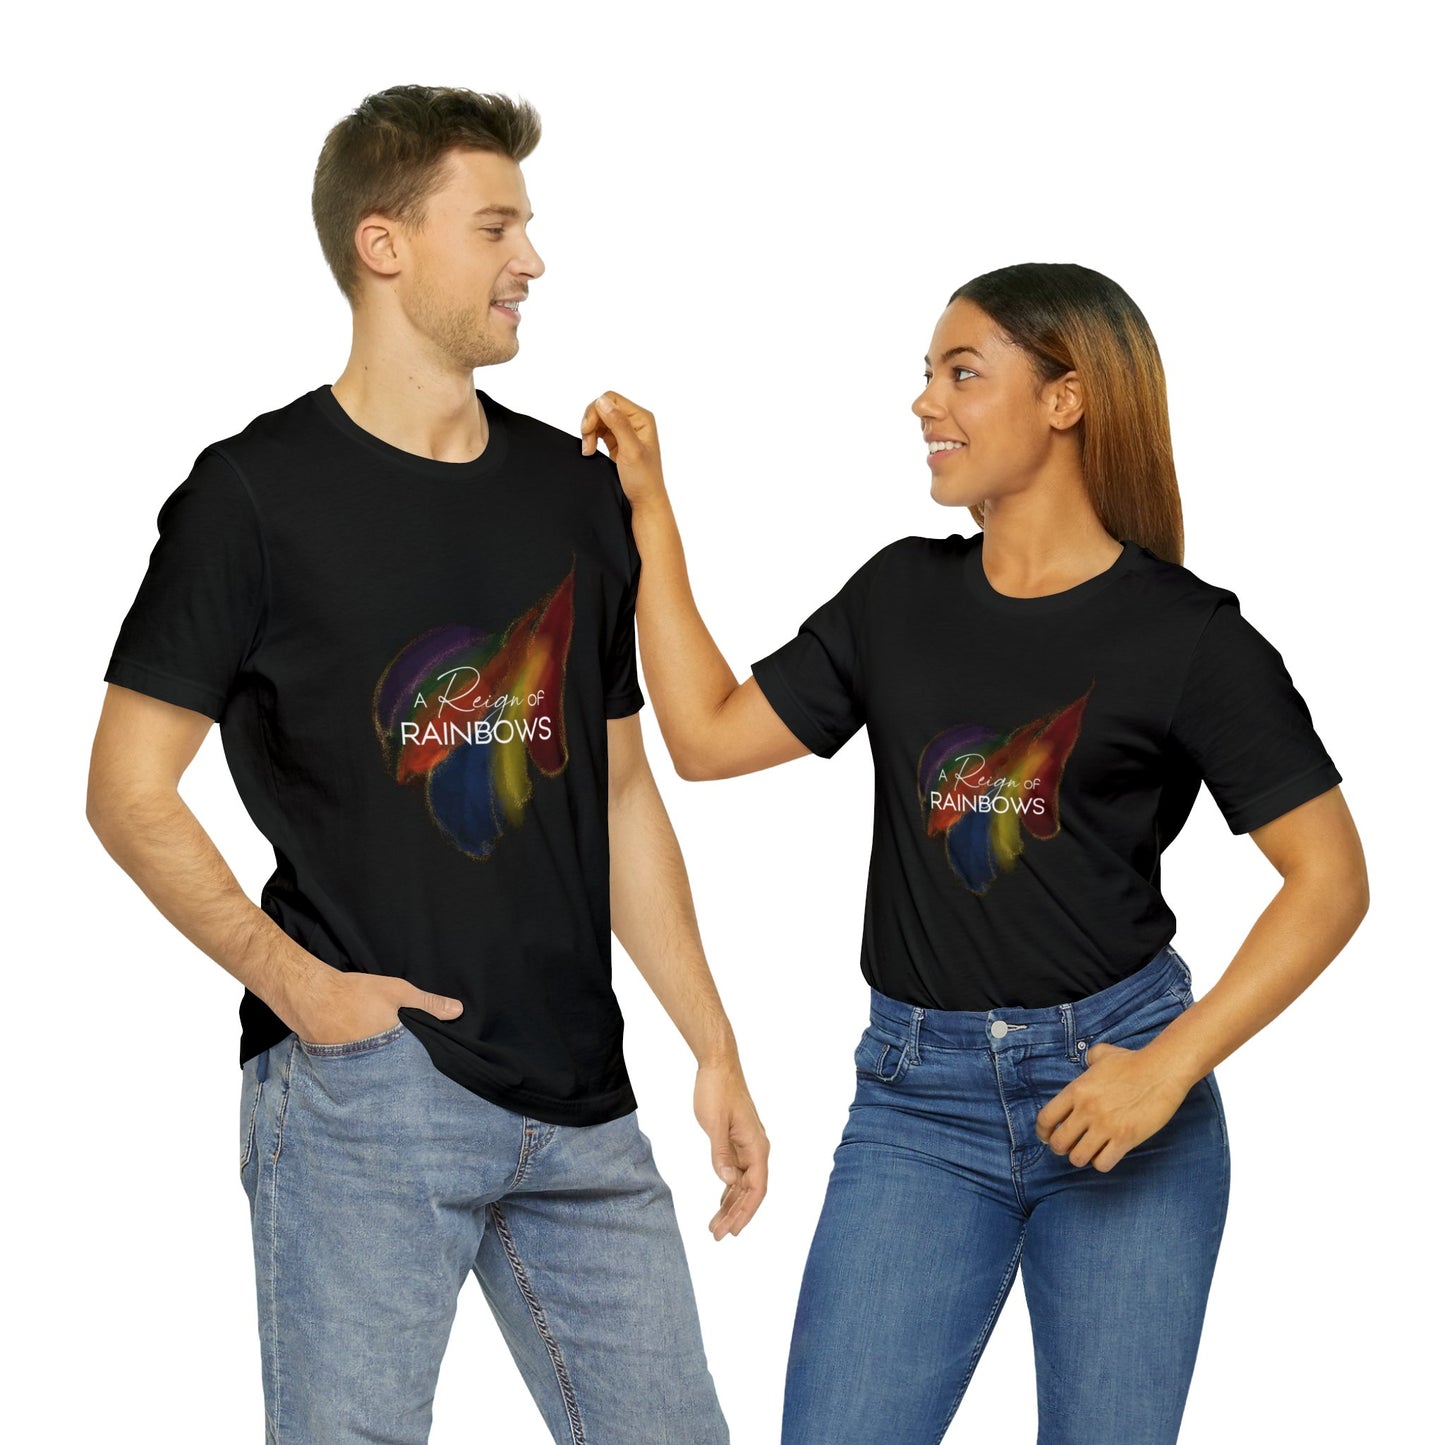 A Reign of Rainbows T-shirt